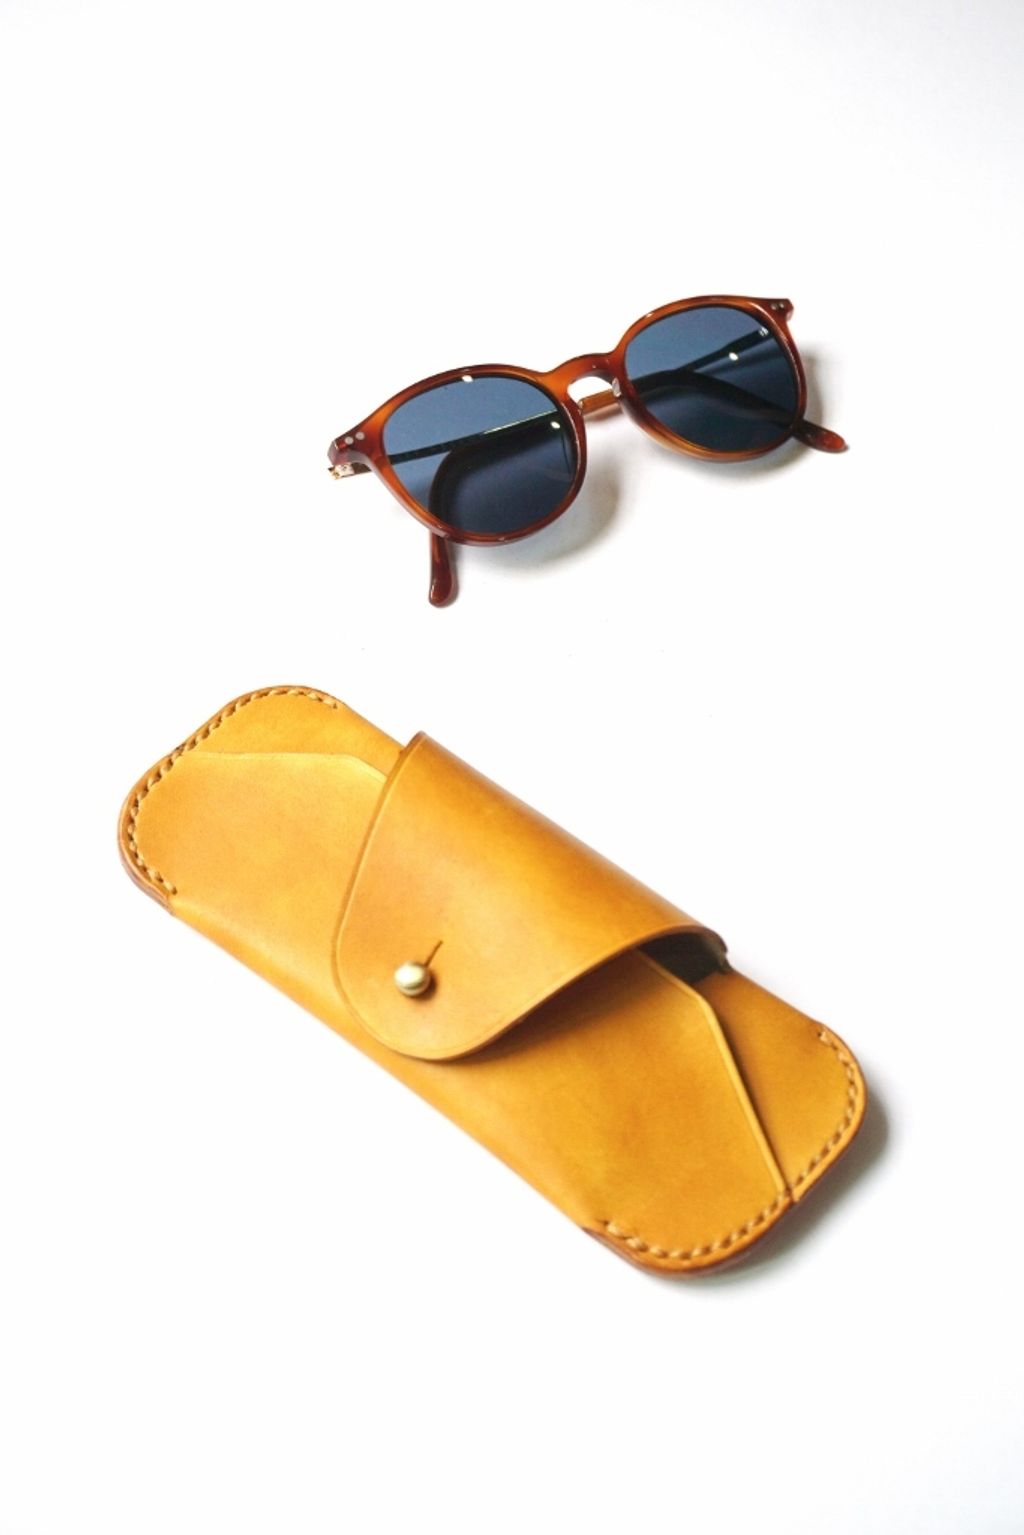 Sunglasses case - Yellow ochre (4).jpg